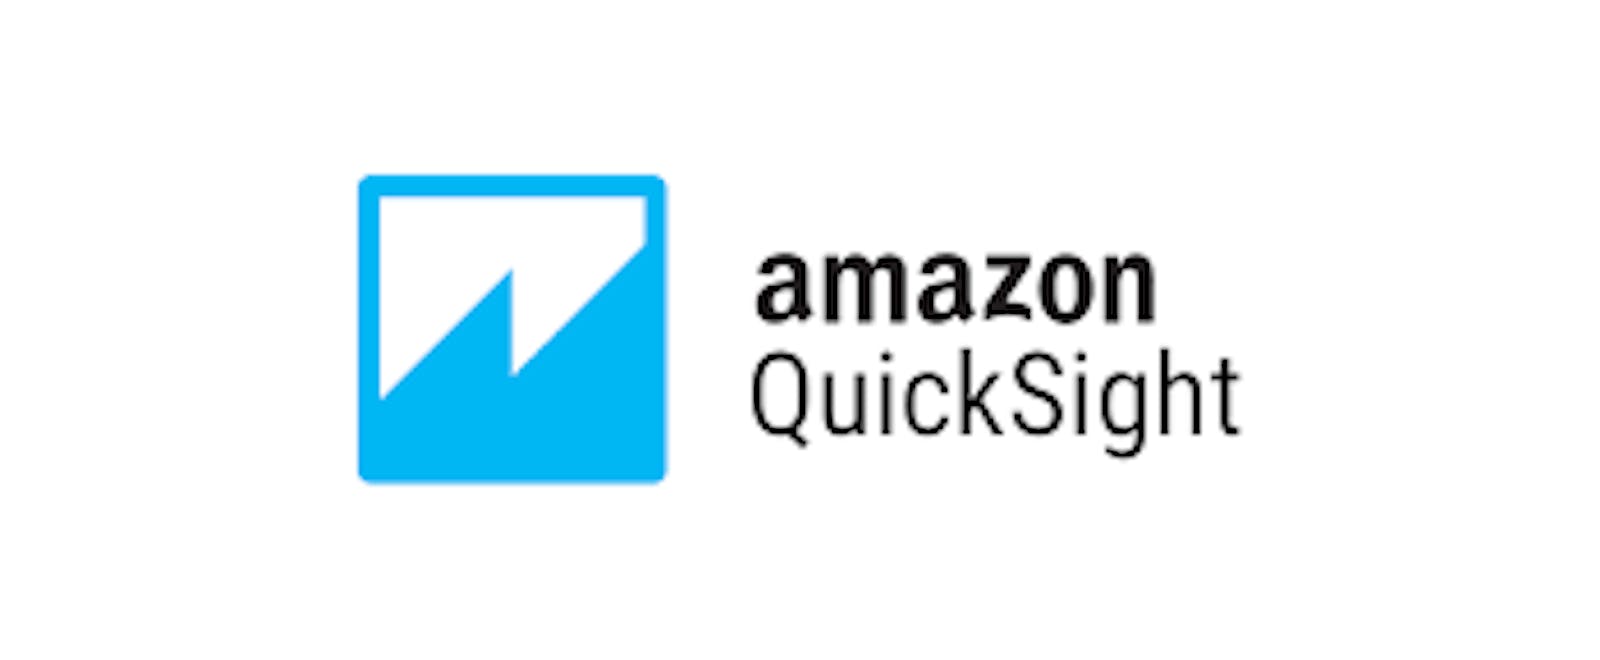 Amazon QuickSight: Empowering Data Visualization and Business Intelligence